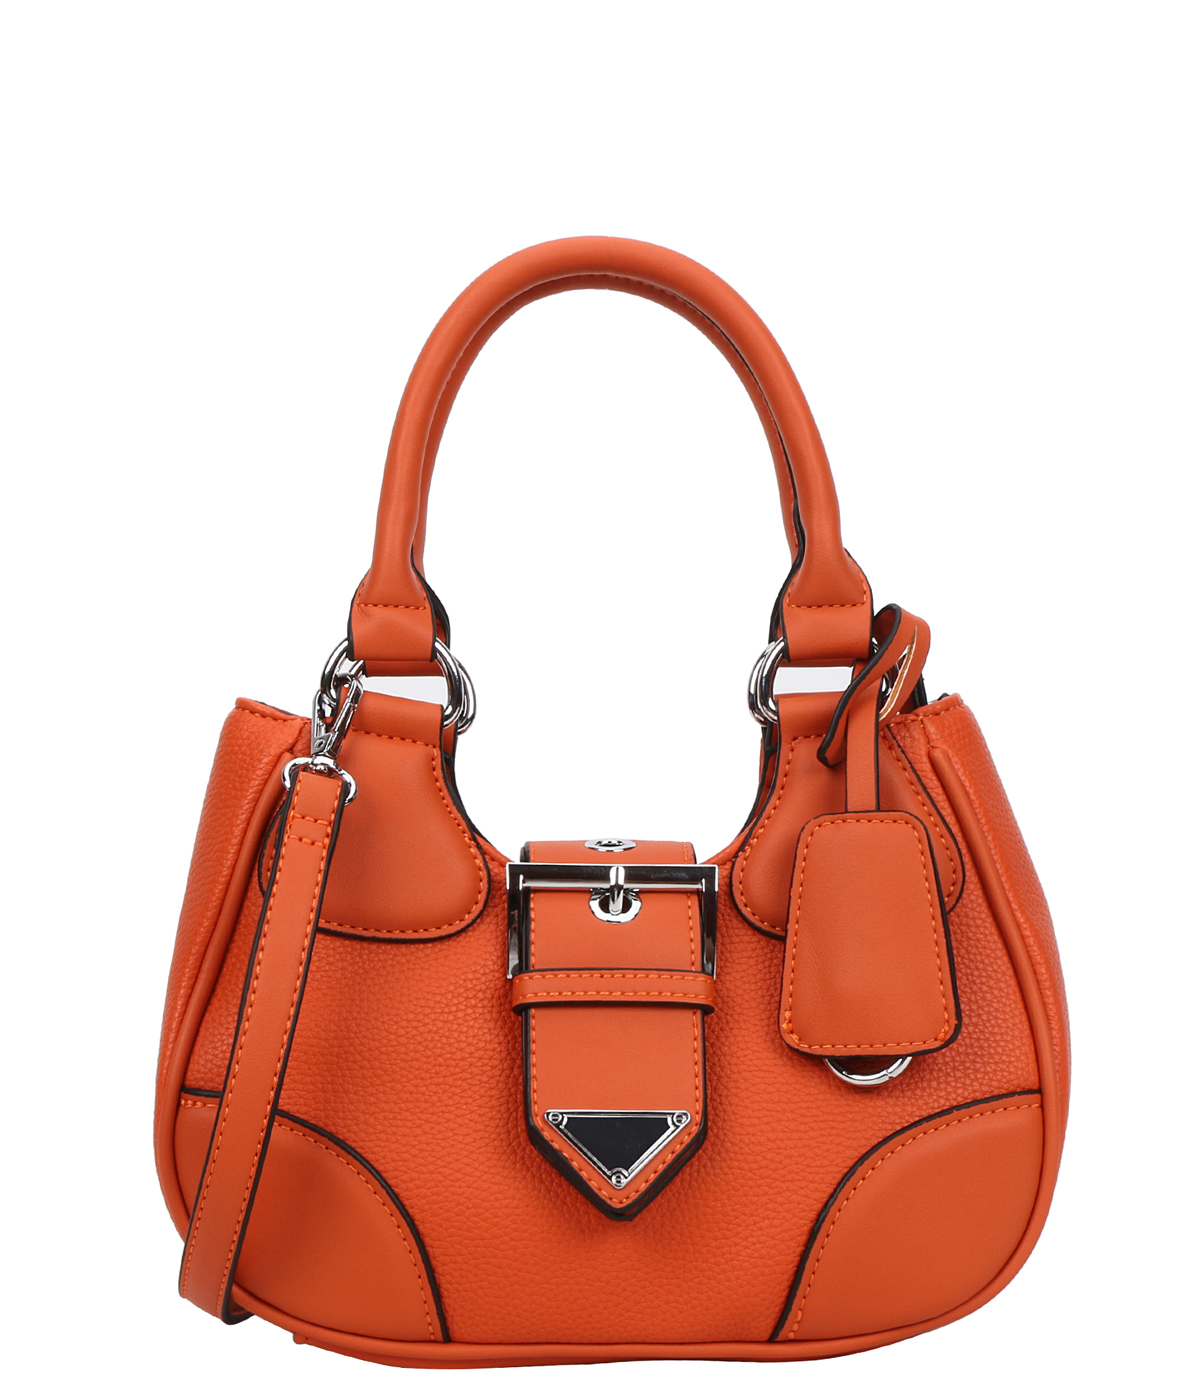 Louis Vuitton Red Accent Handbag